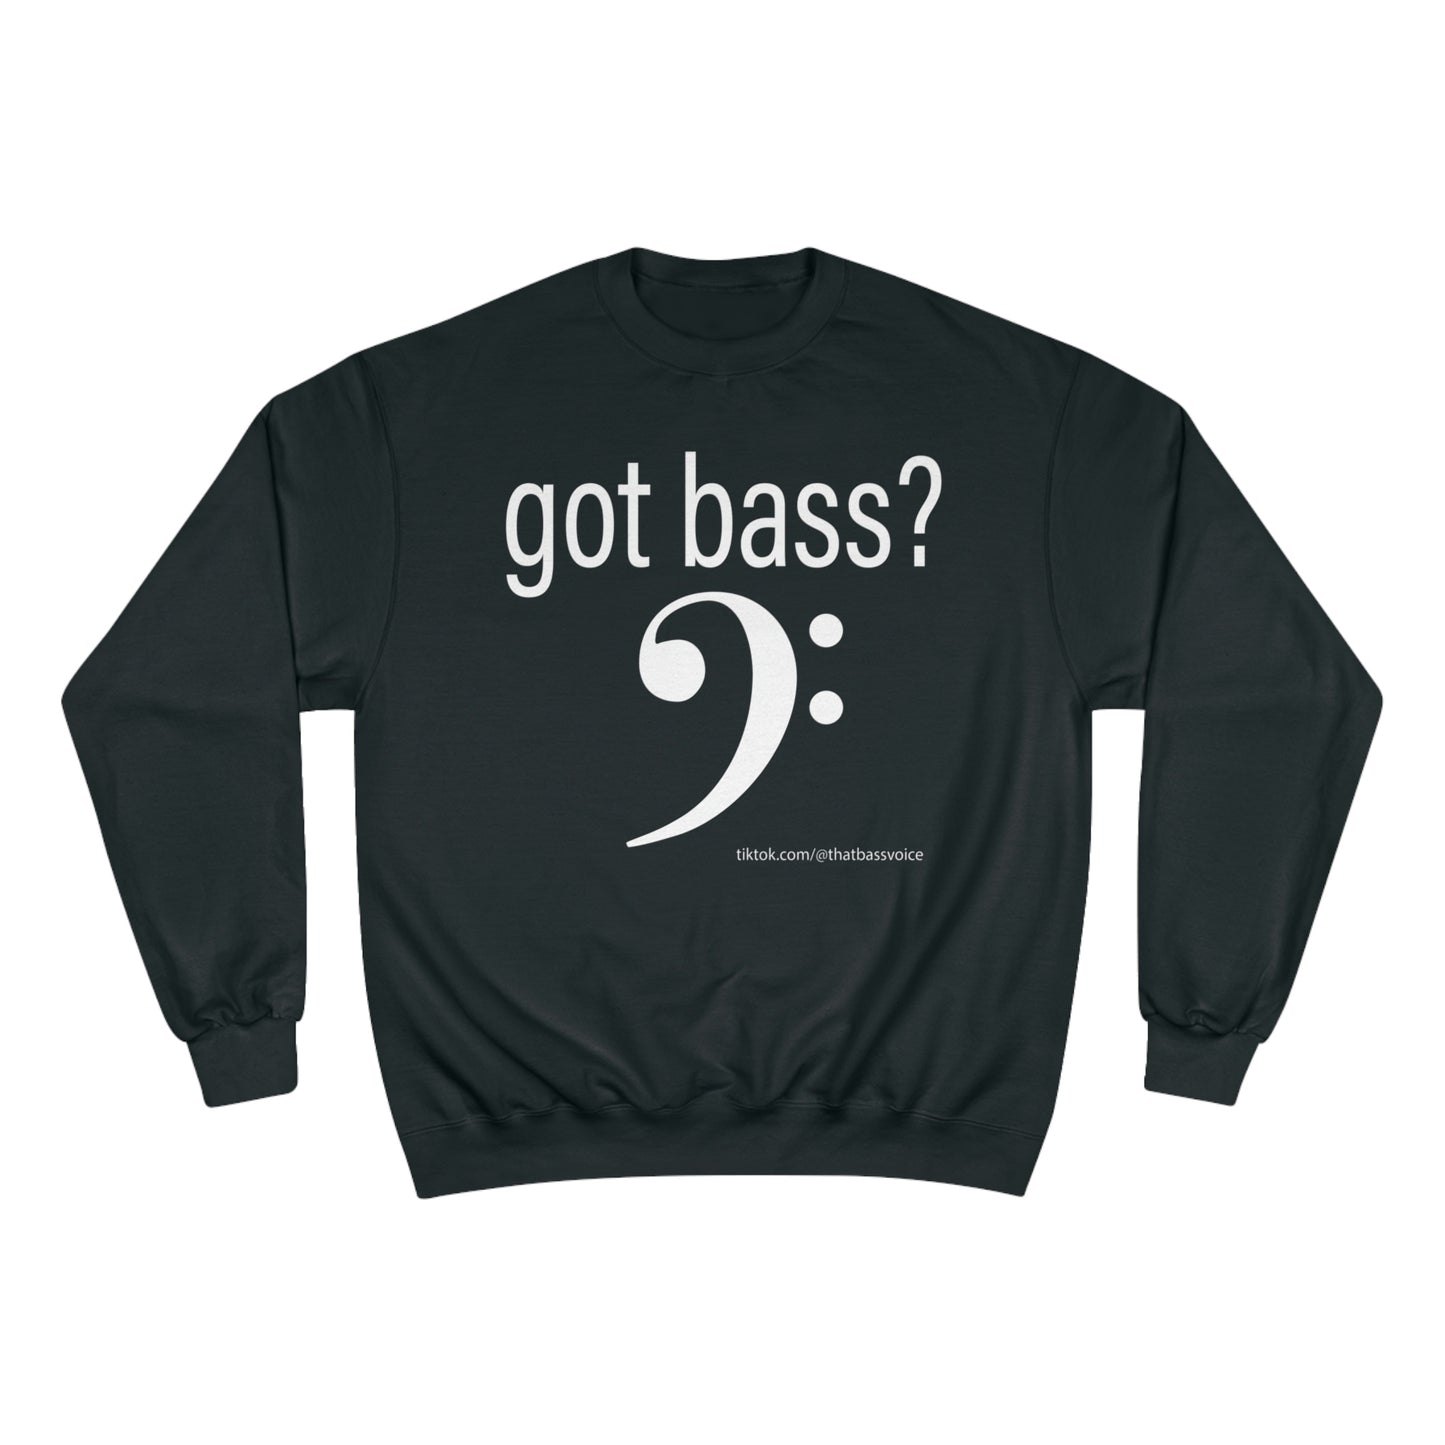 "got bass?" Champion Sweatshirt